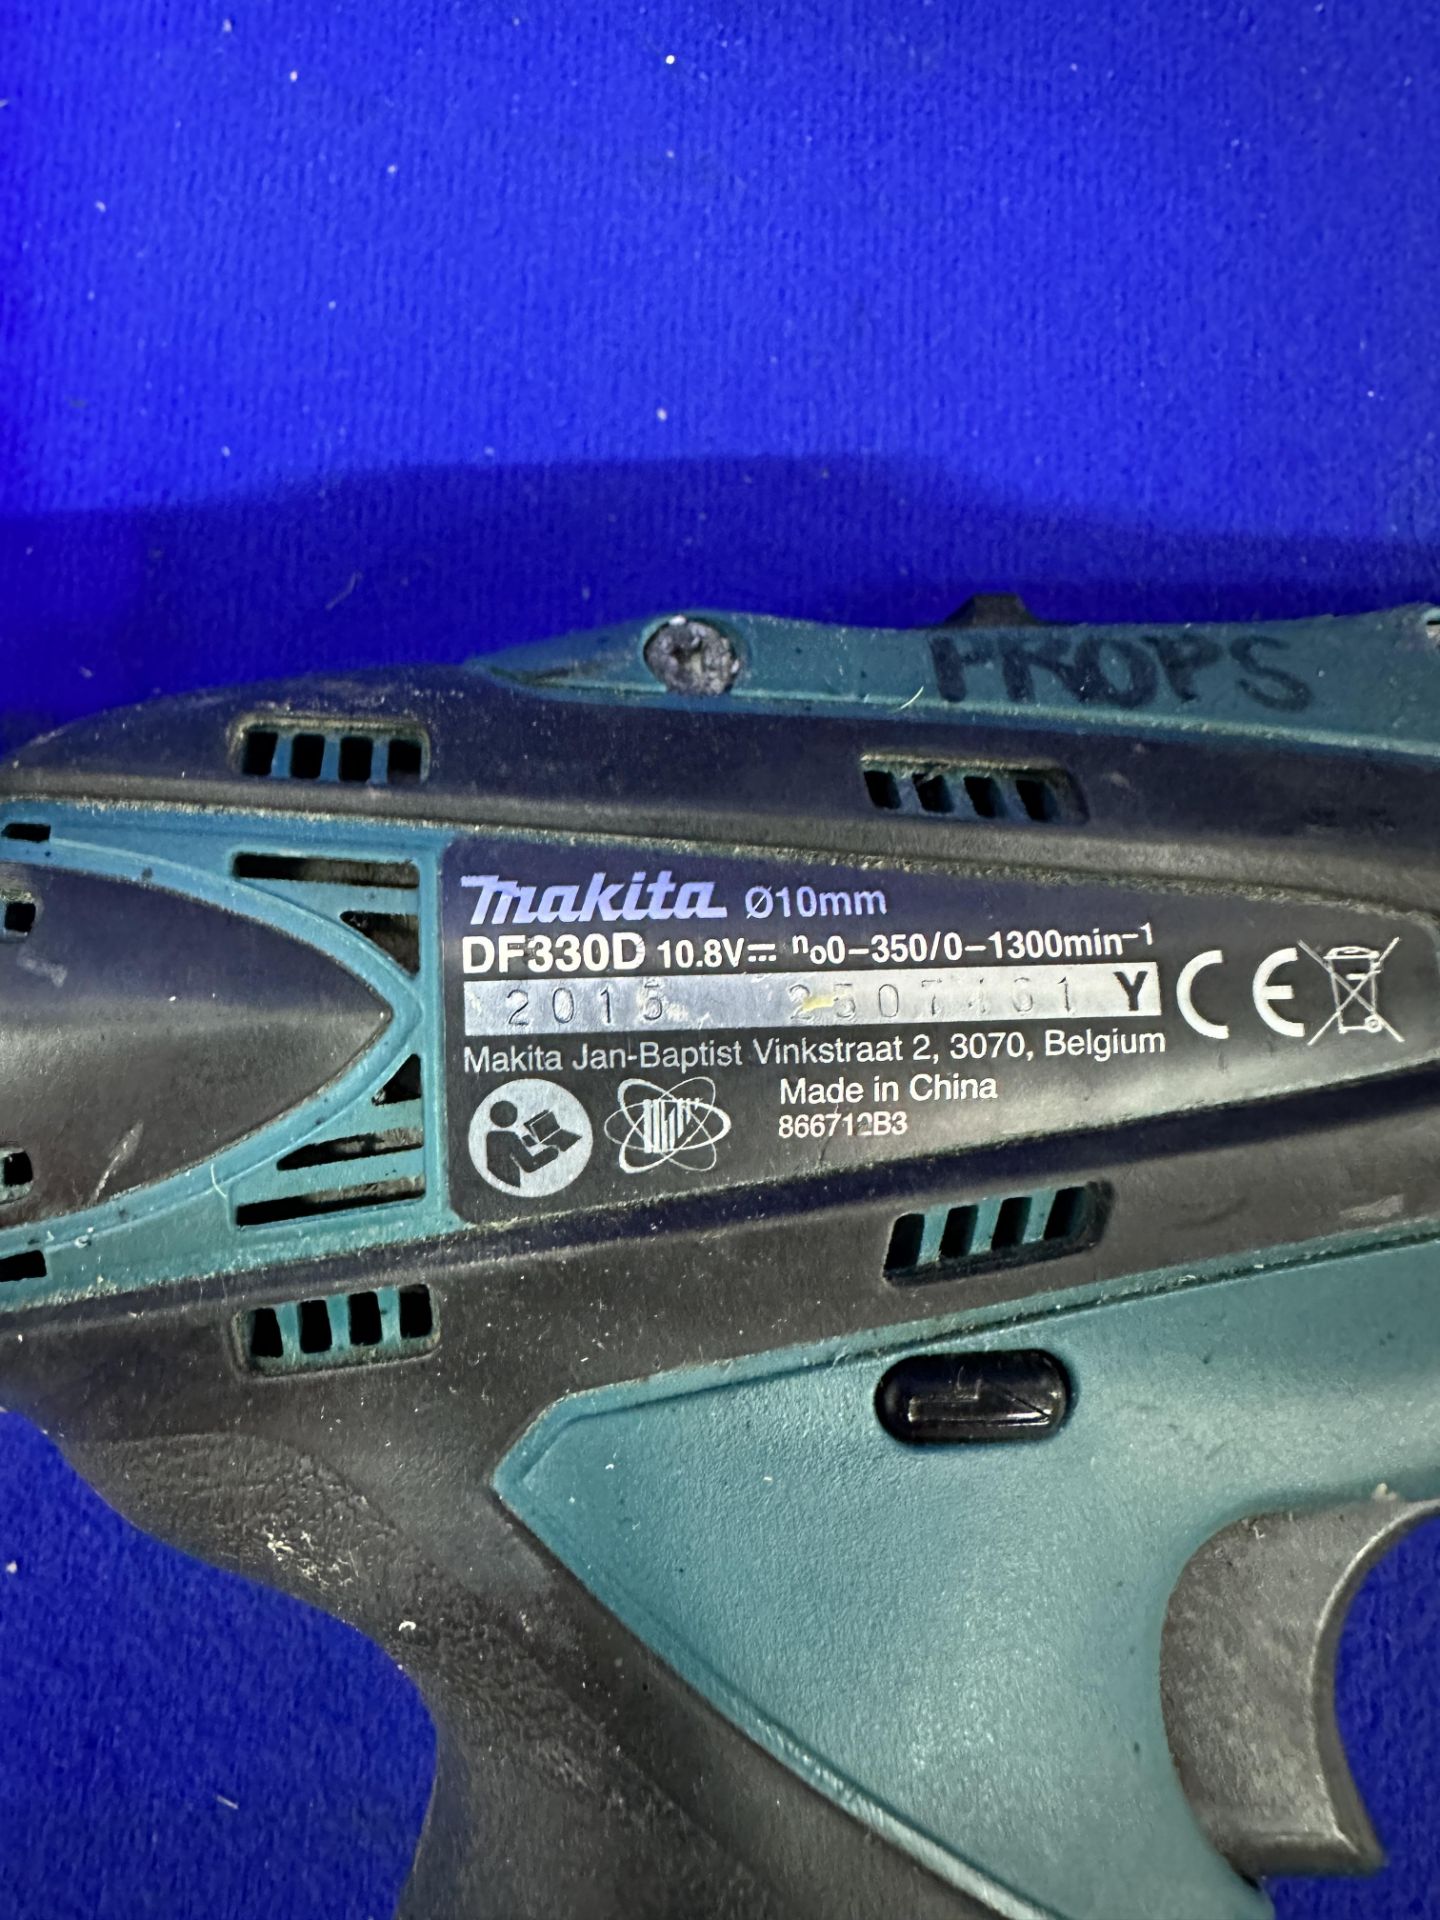 Makita HP1631K 240V 710W Corded Hammer drill - Image 7 of 7